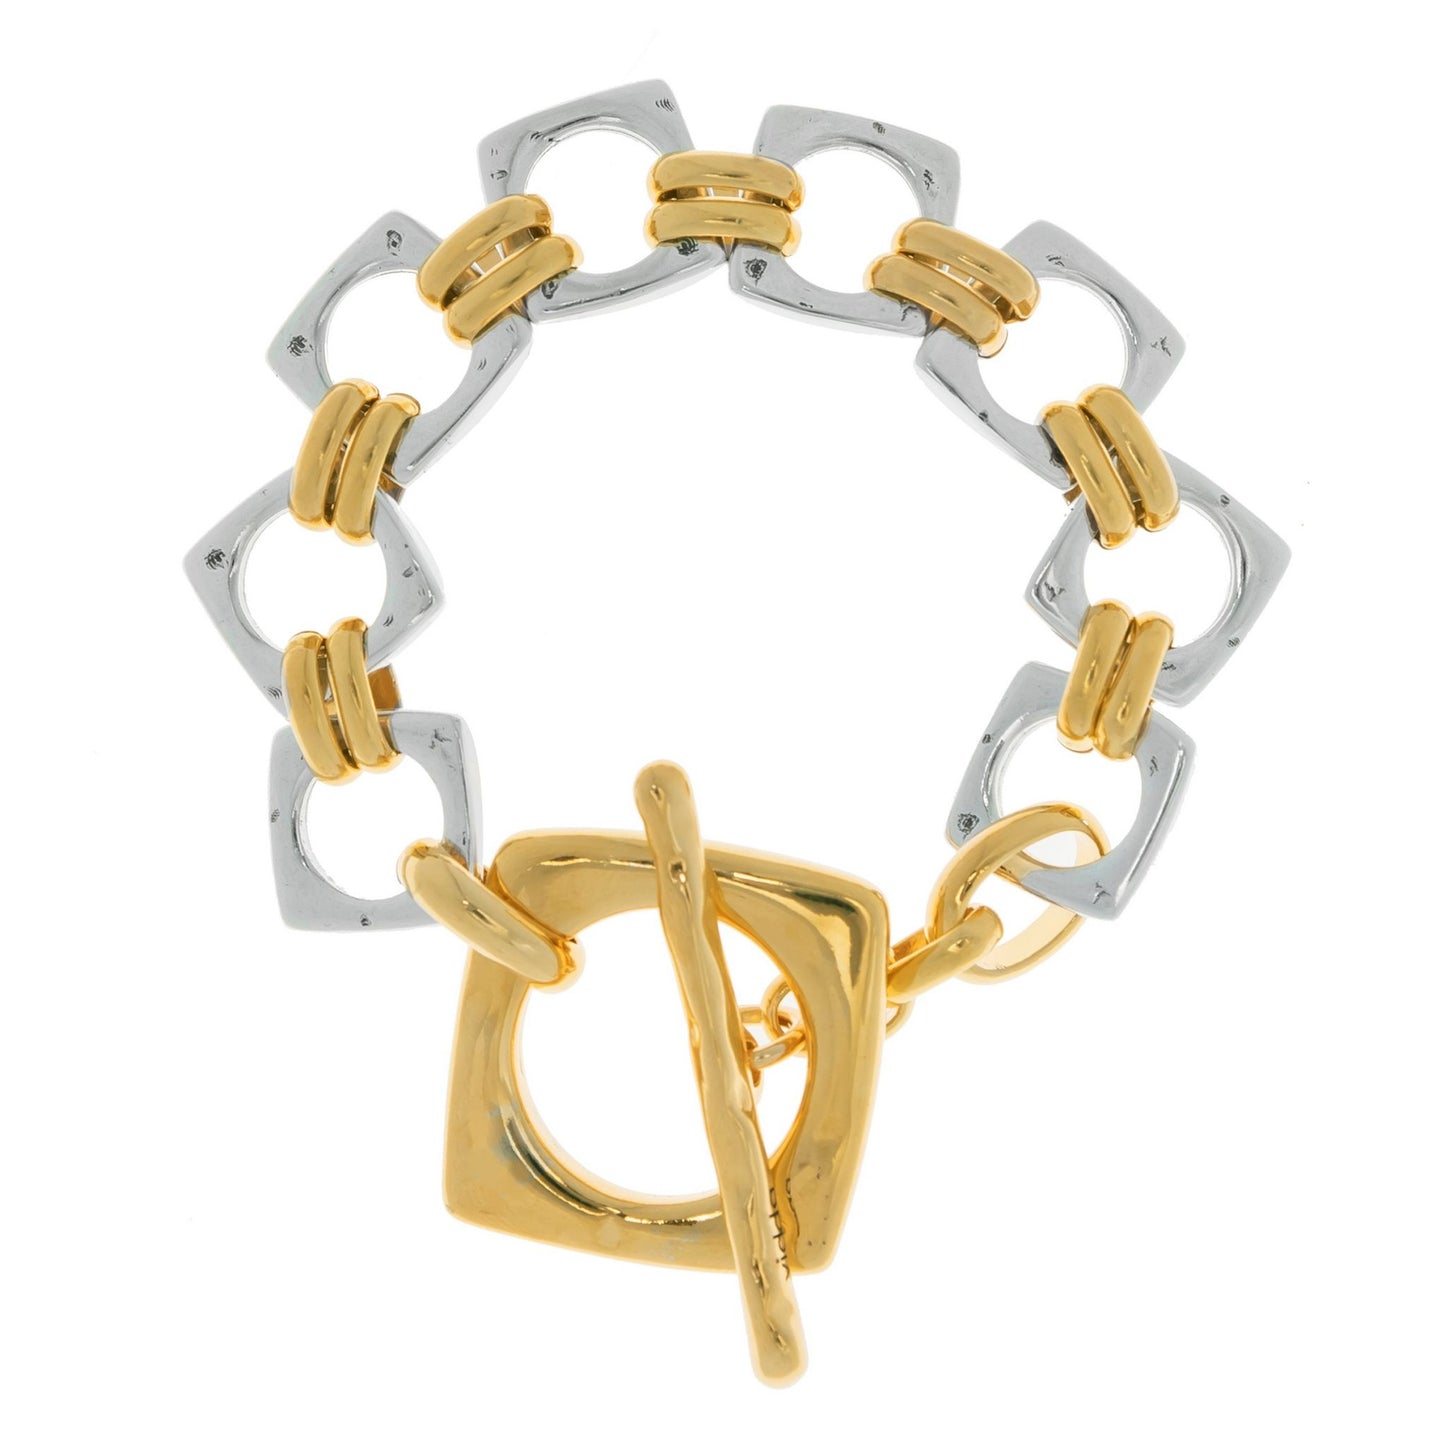 Louis Vuitton bloom bracelet gold plated 24k gold